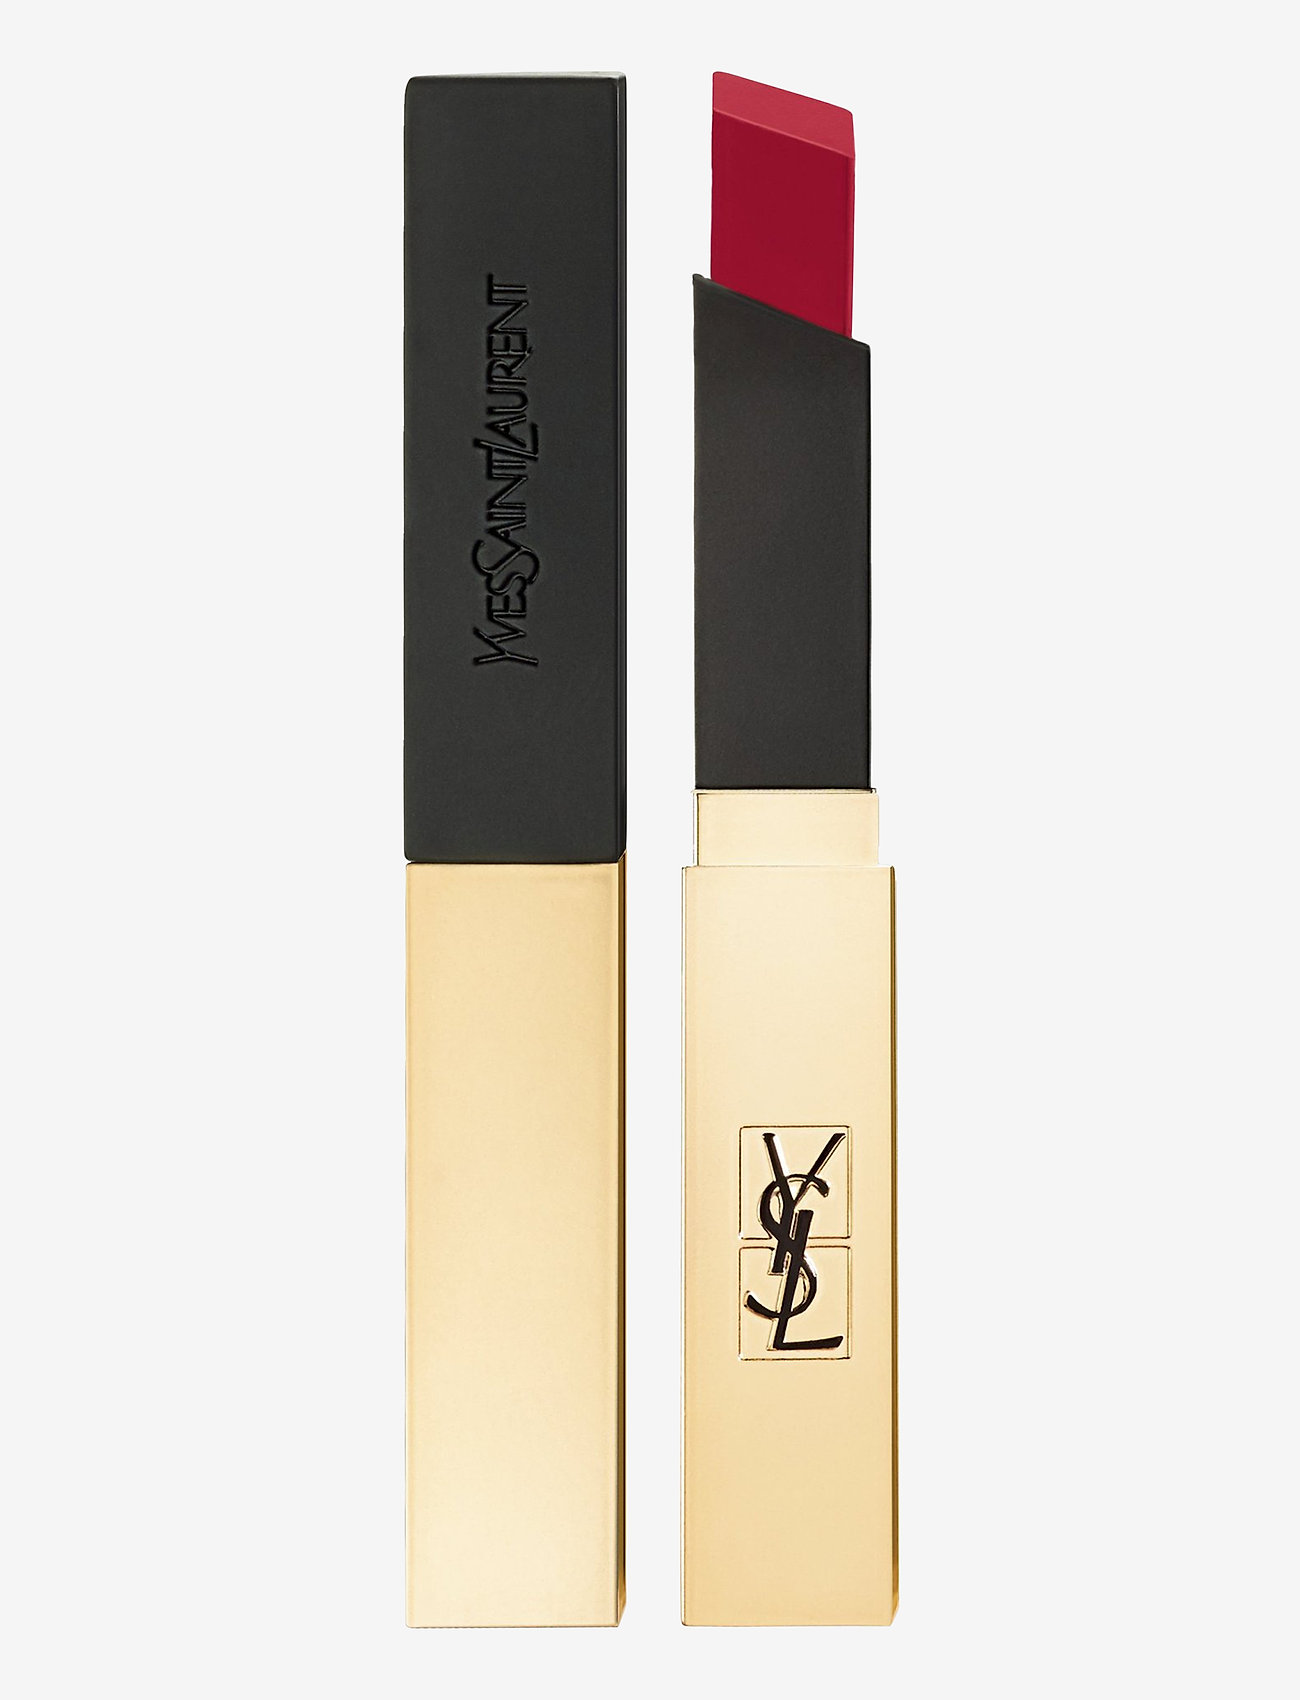 Yves Saint Laurent - Rouge Pur Couture The Slim Lipstick - läppstift - 21 rouge paradoxe - 0